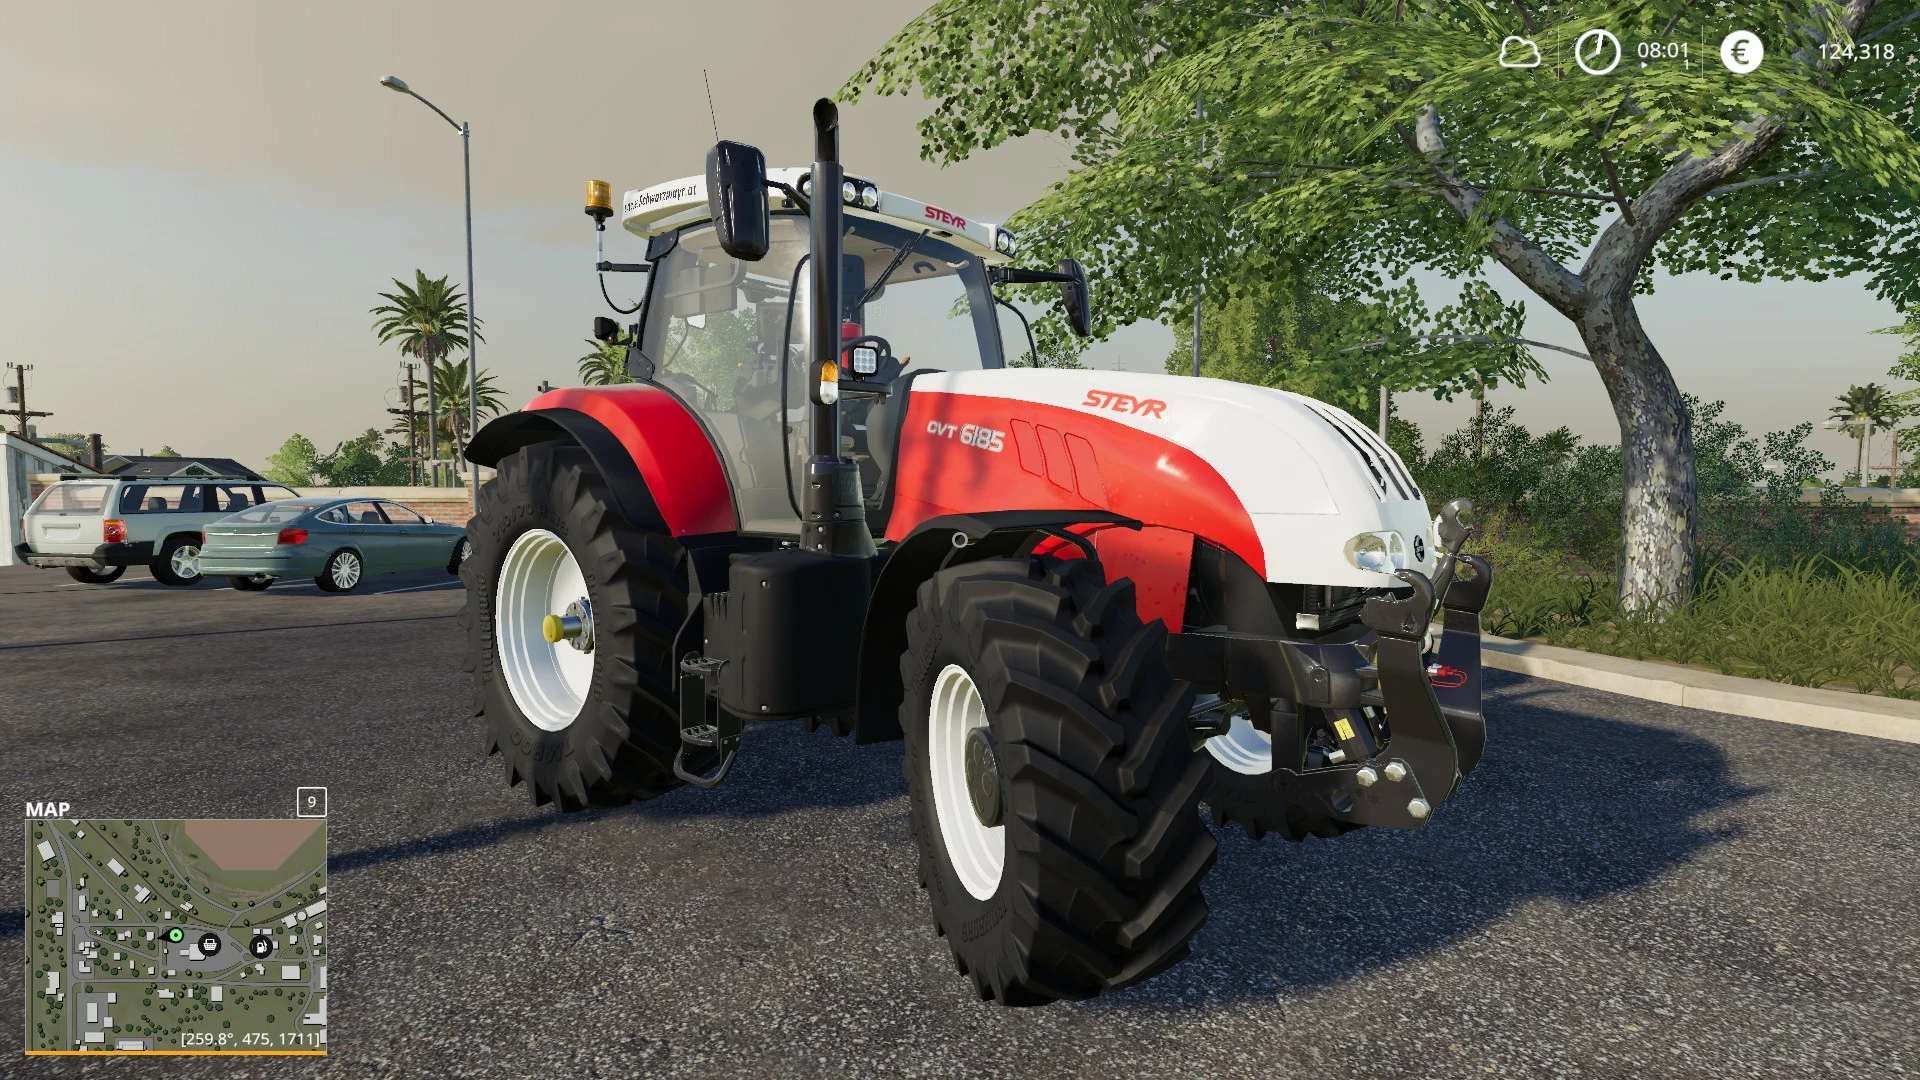 Steyr Tractor Pack V10 Fs19 Farming Simulator 19 Mod Fs19 Mod Images And Photos Finder 9730